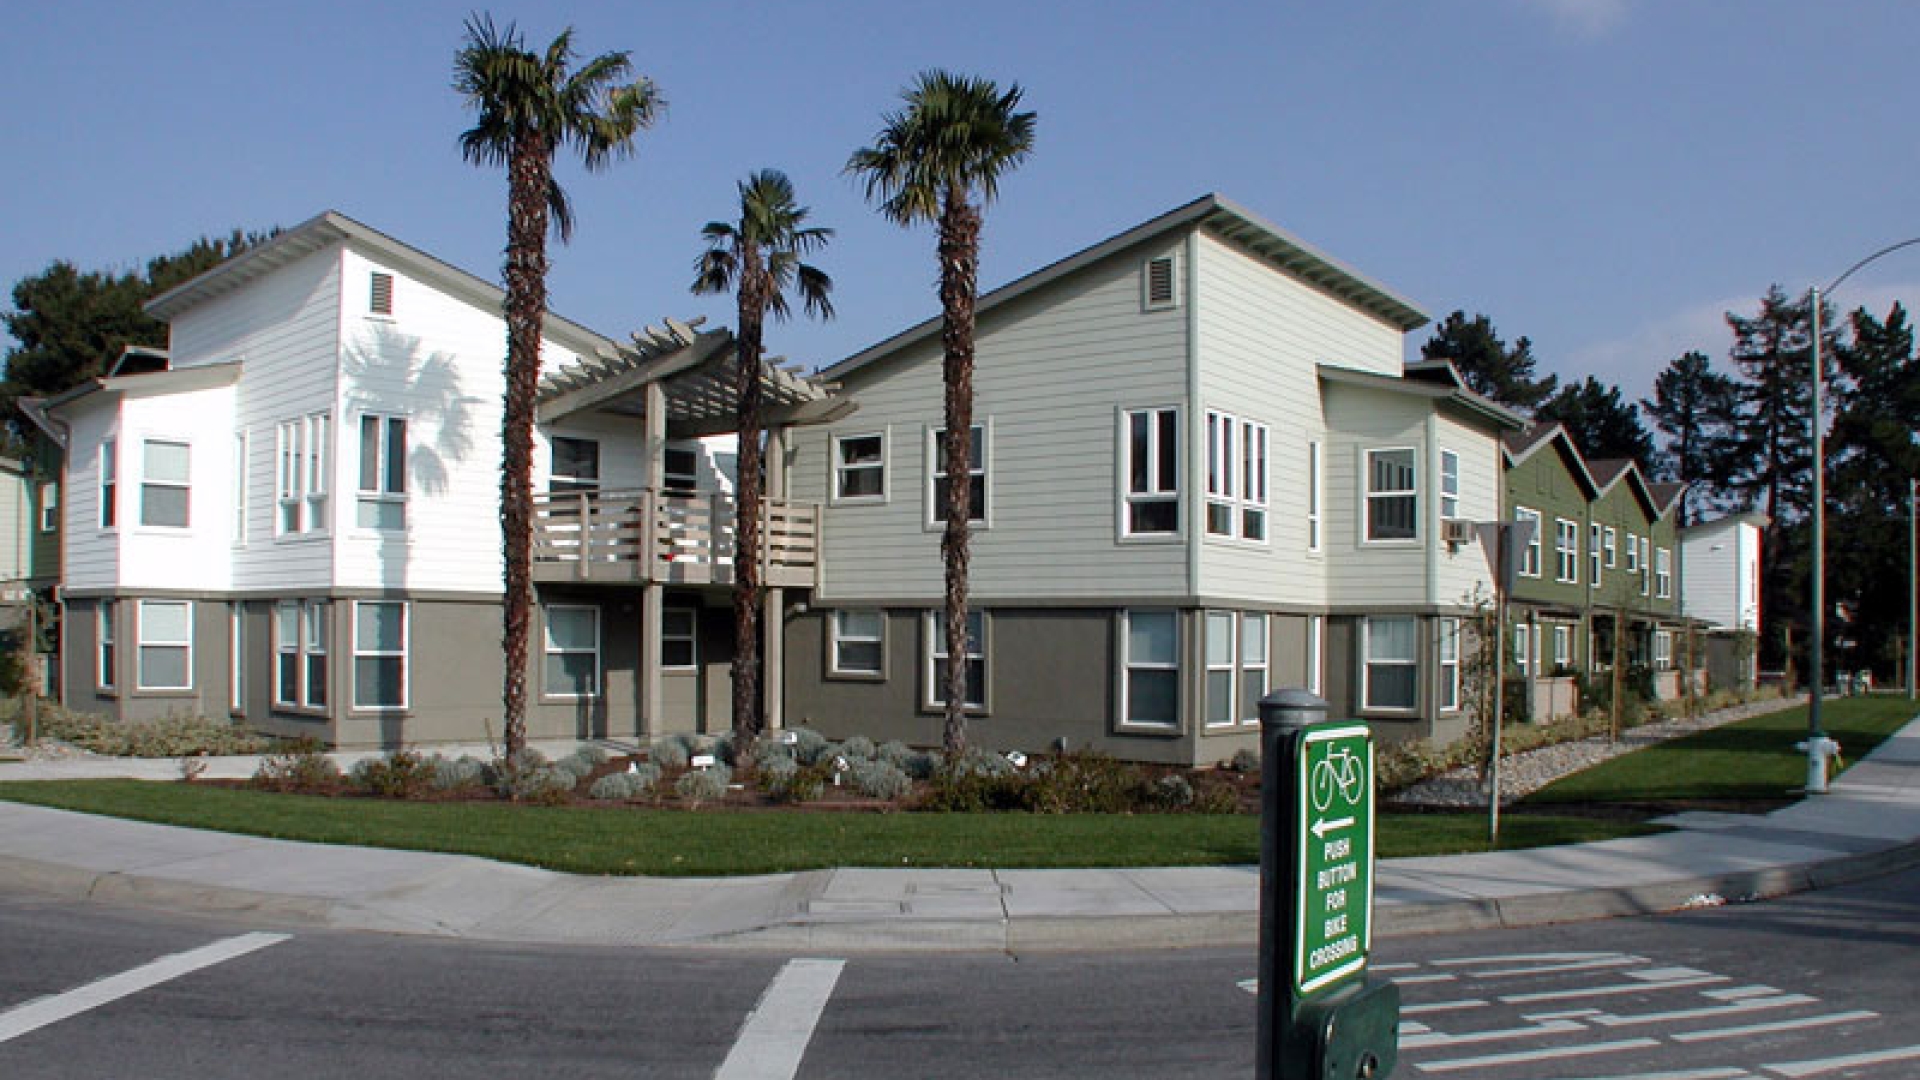 Exterior view of Stoney Pine Villa in Sunnyvale, California.